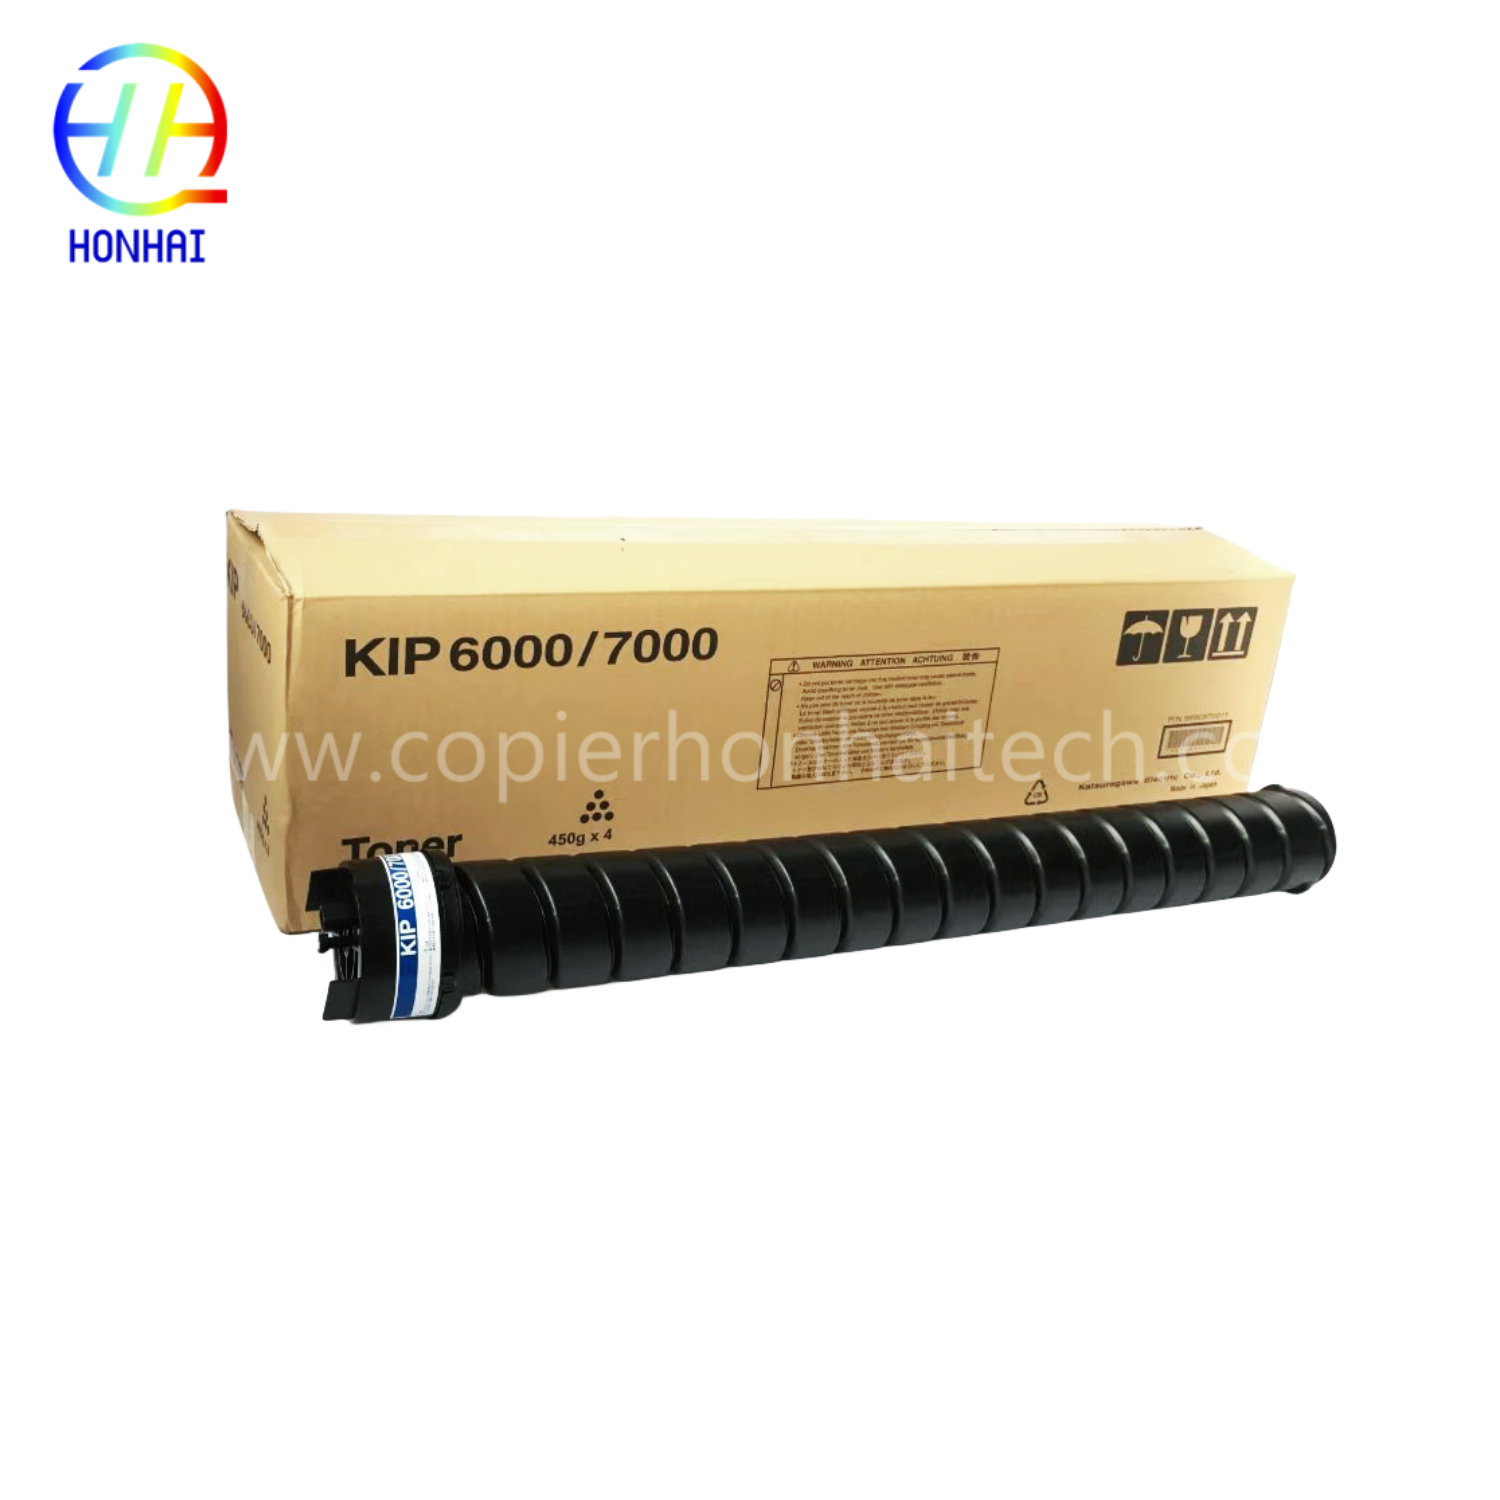 https://www.copierhonhaitech.com/toner-cartridge-for-kip-6000-7000-yan-black-kip-toner-product/